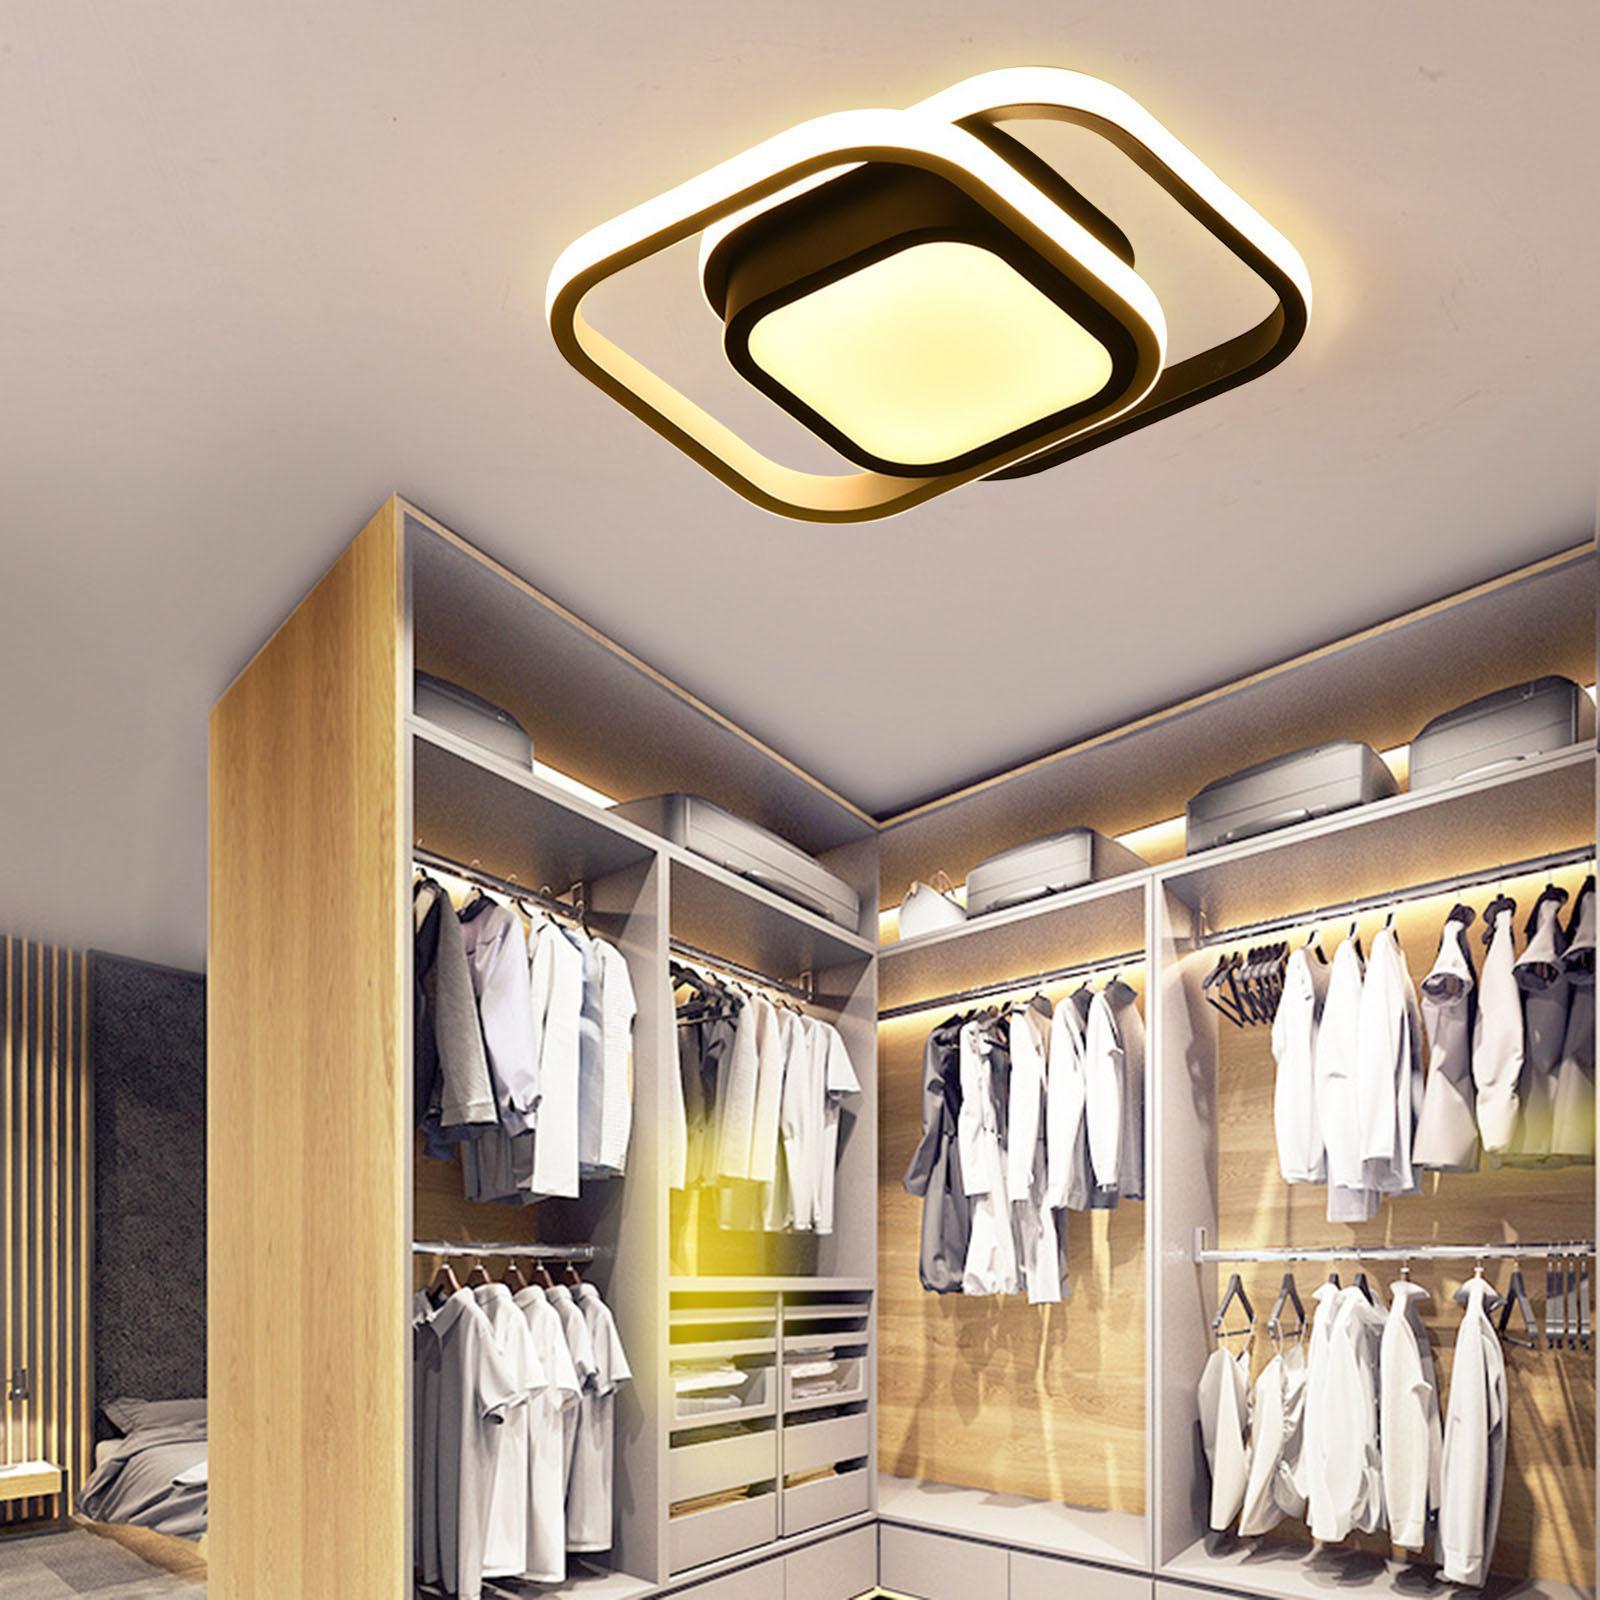 LED Ceiling Light Surface Mounted for Hallway Balcony Restaurant